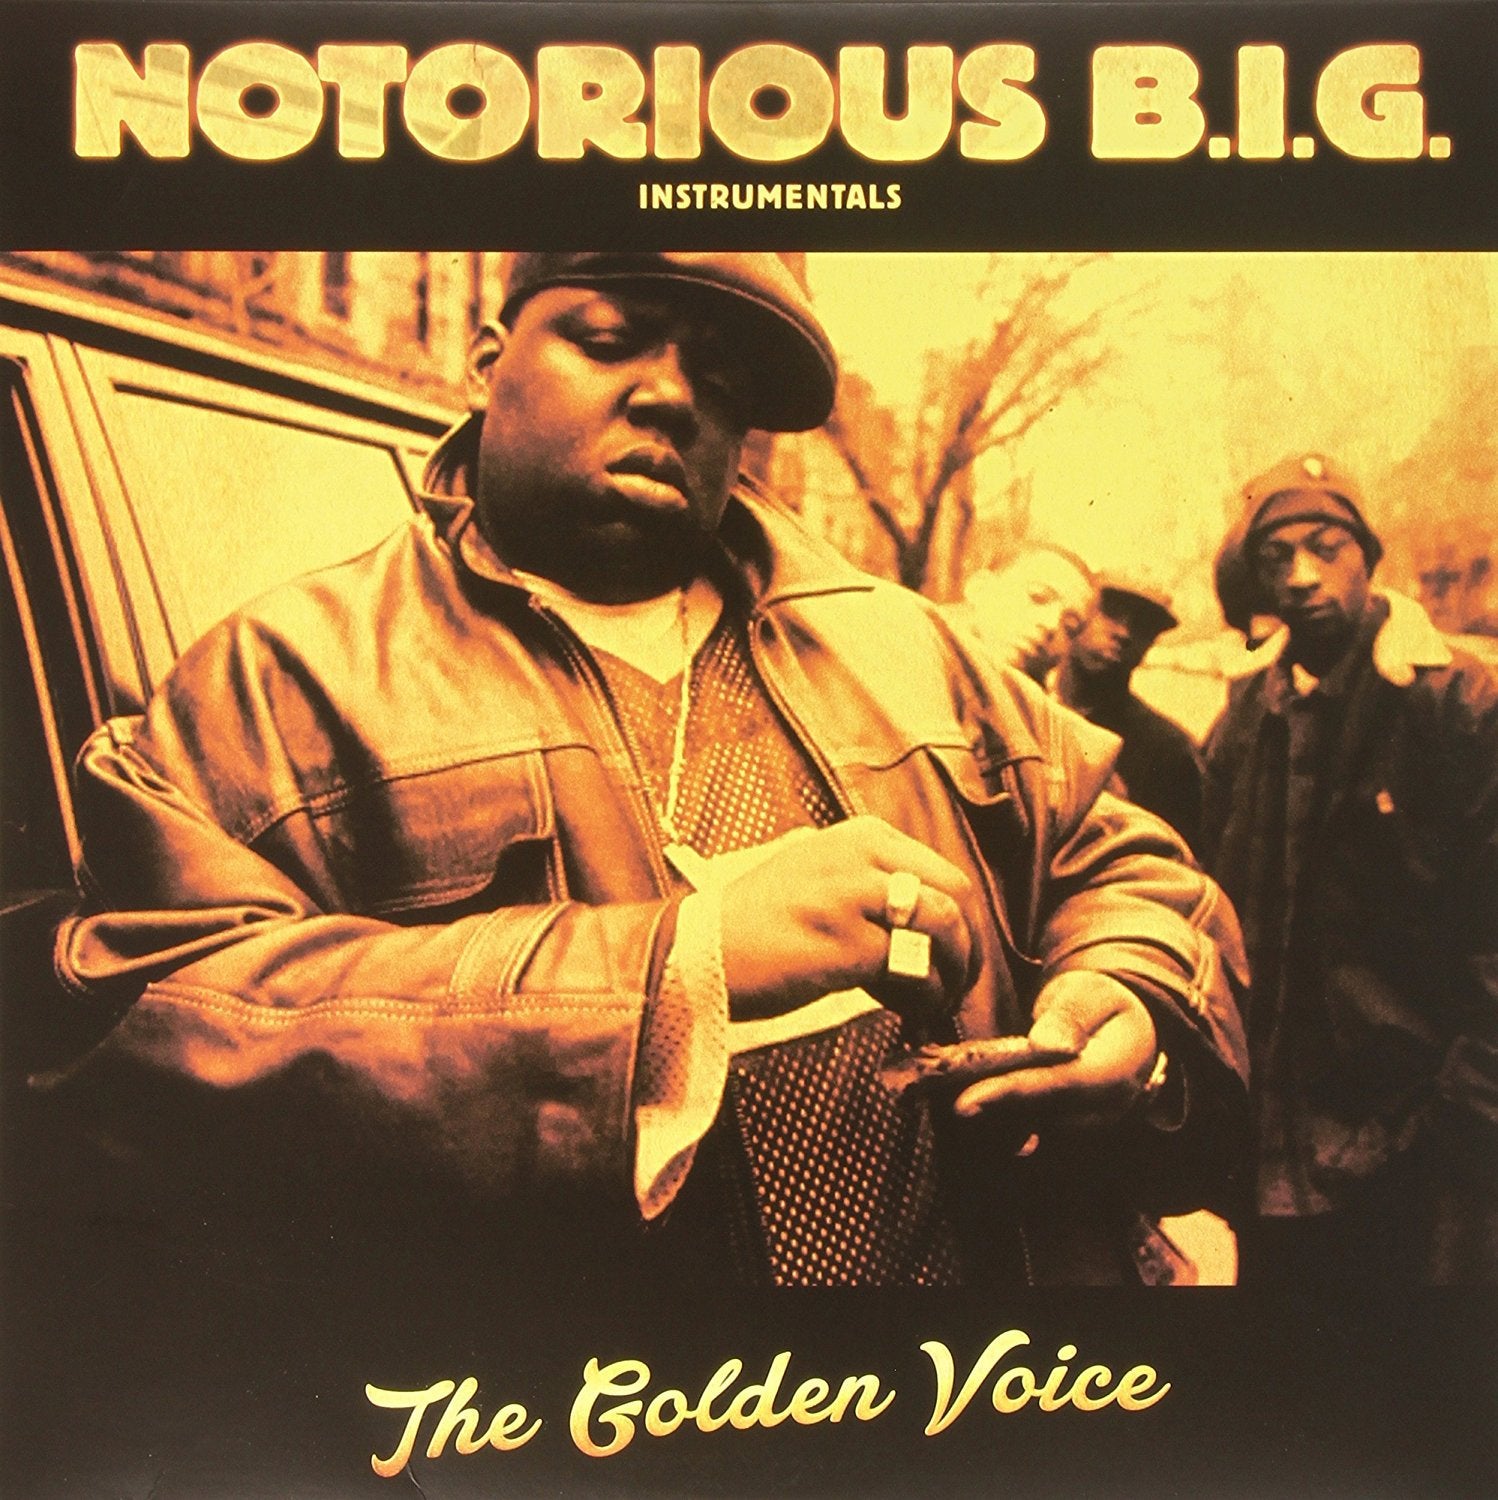 The Notorious B.I.G. | Instrumentals the Golden Voice | Vinyl